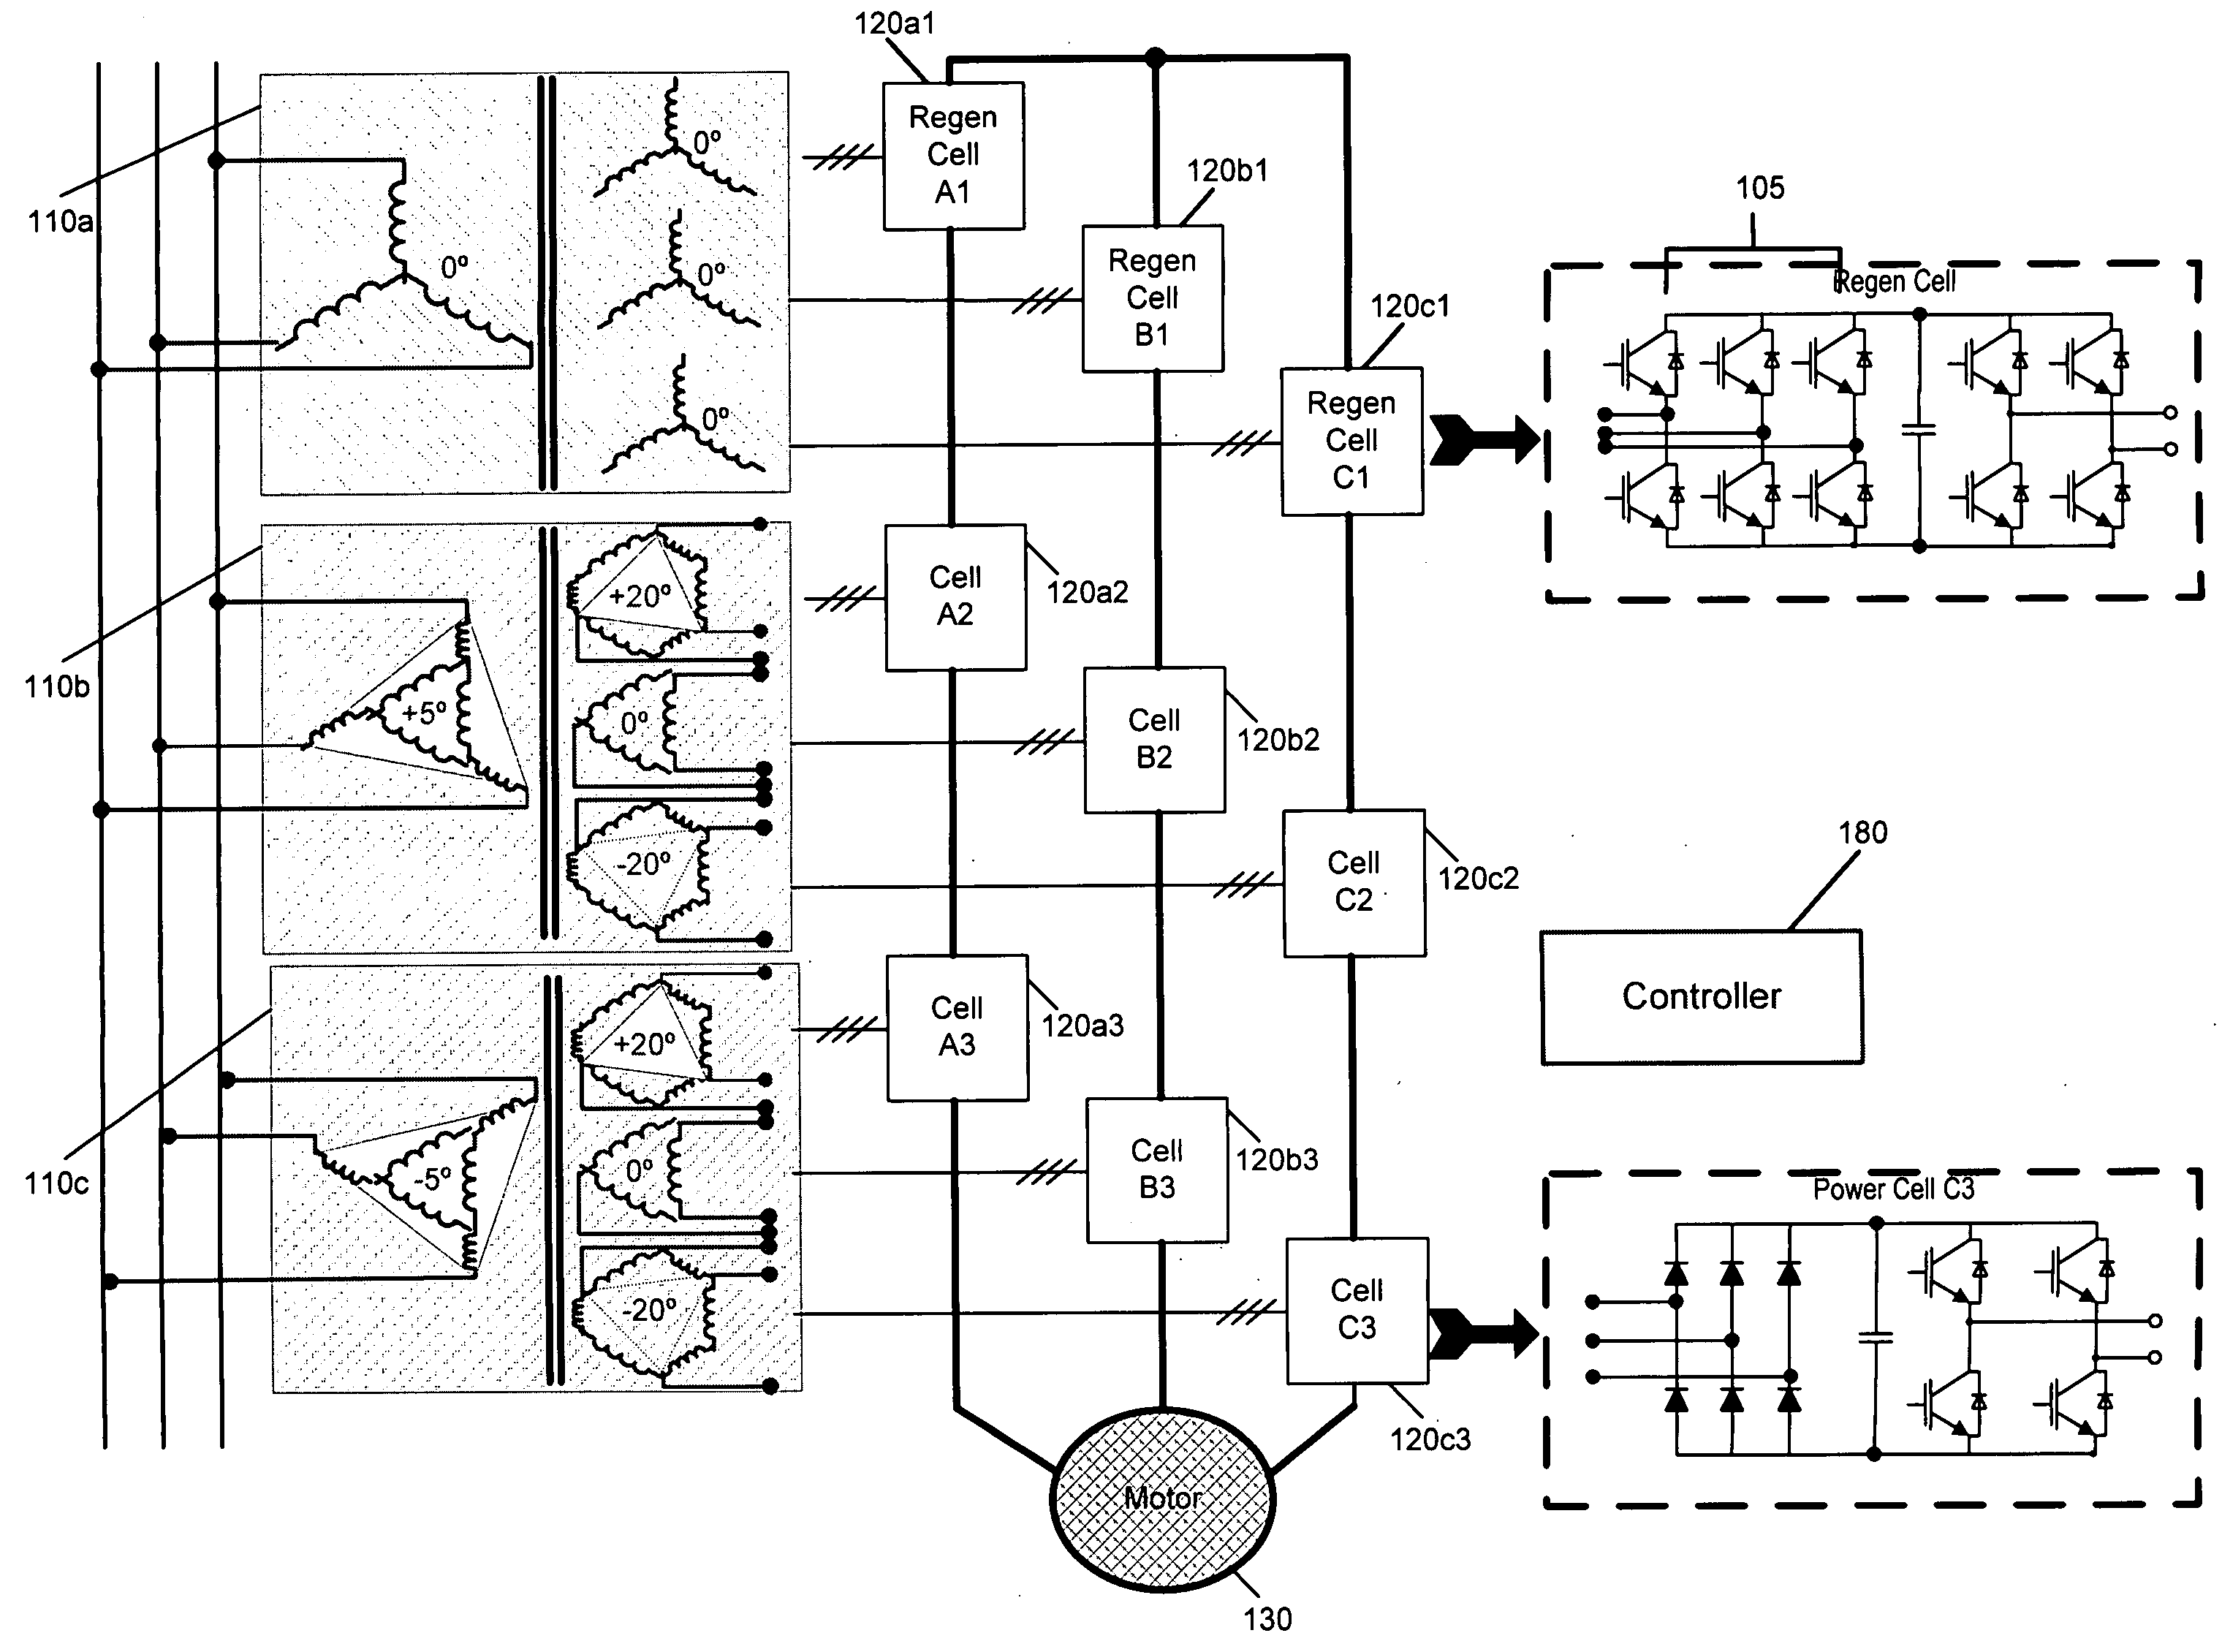 Partial regeneration in a multi-level power inverter